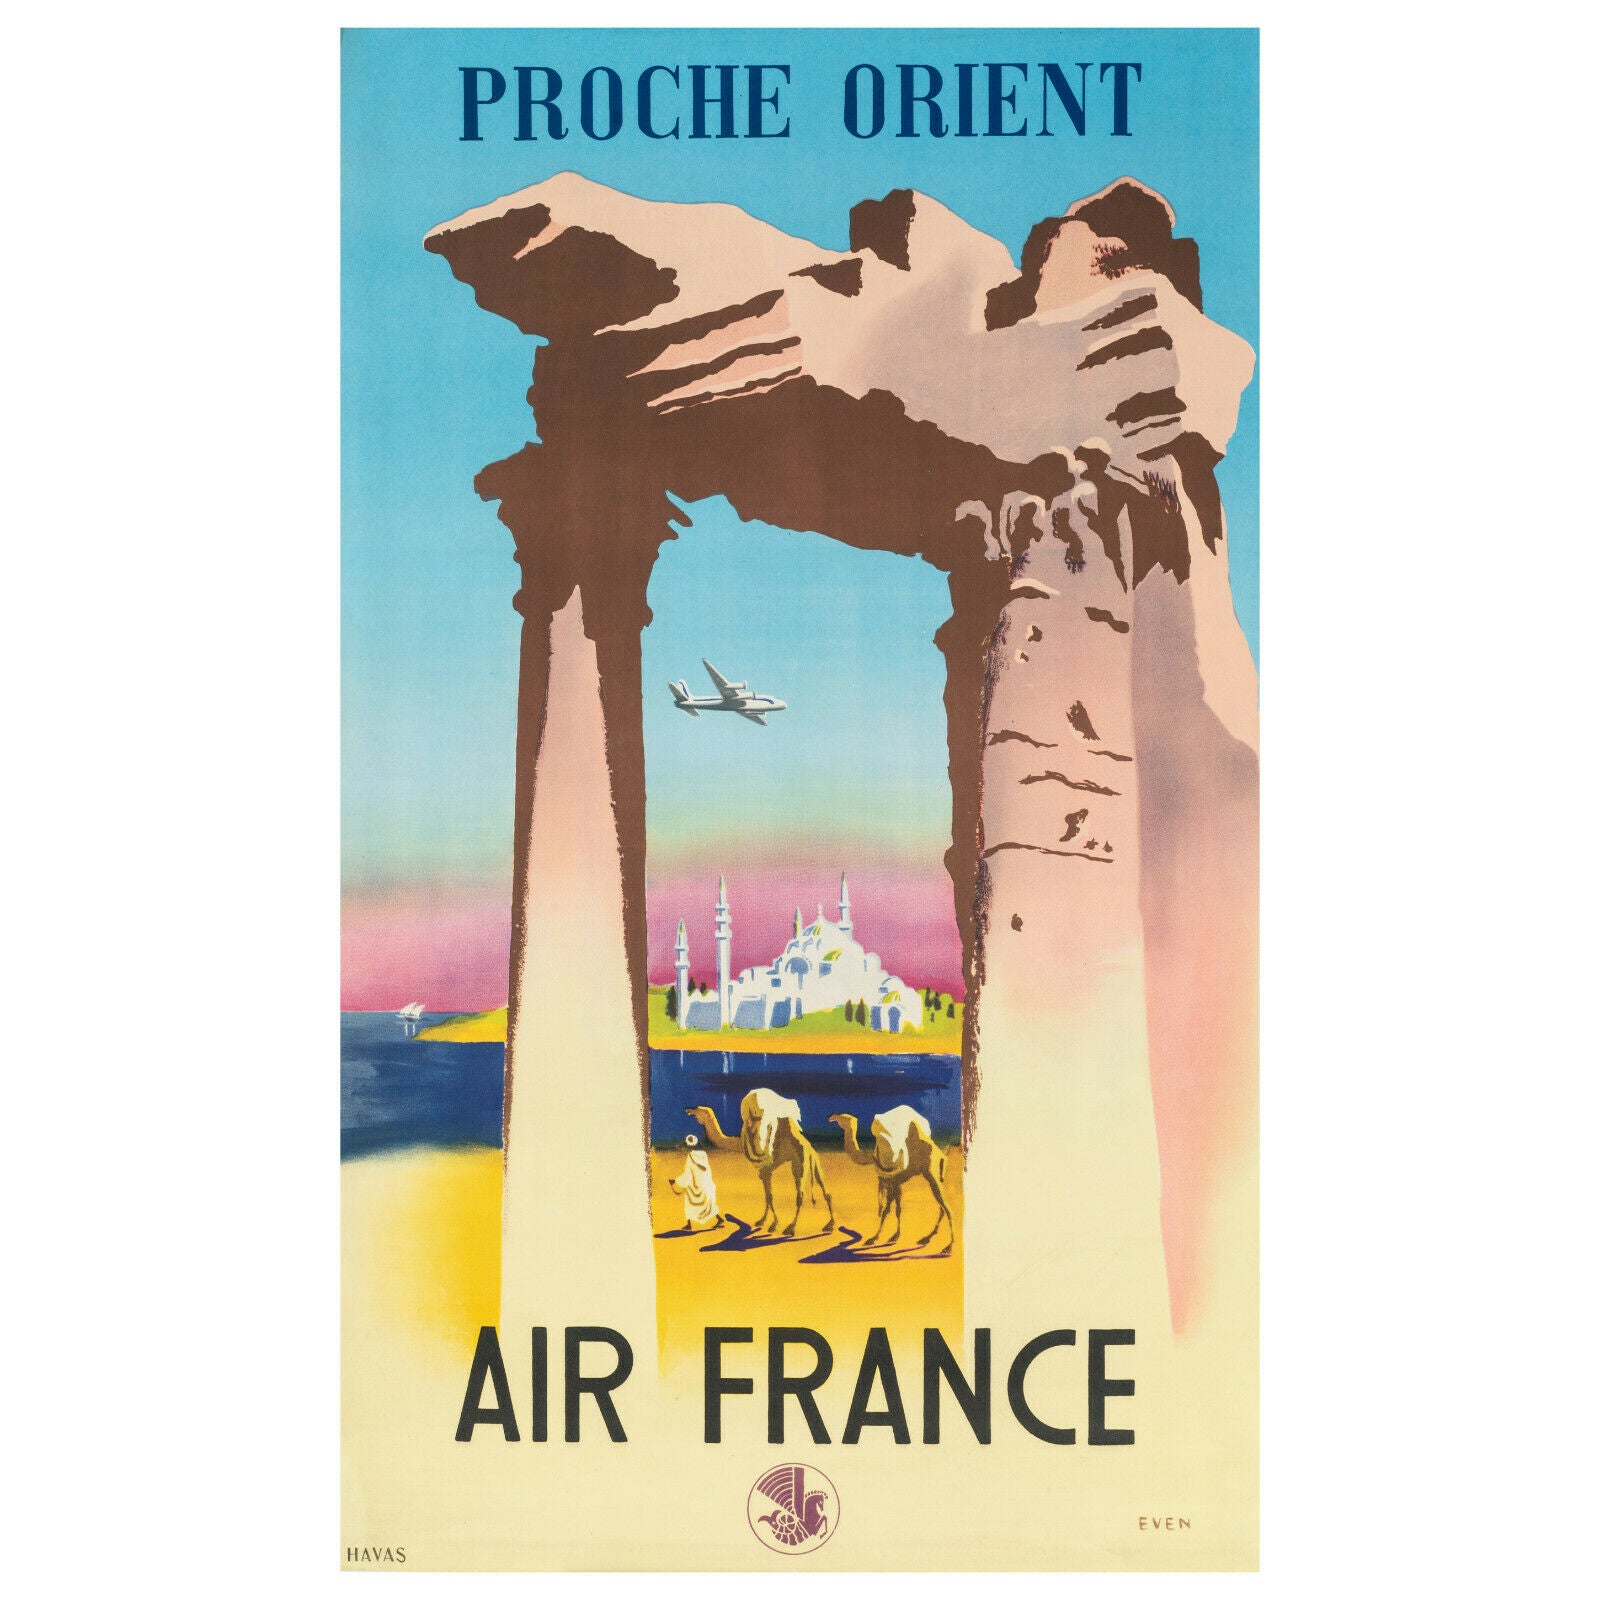 Jean Even, Original Vintage Airline Poster, Air France, Istanbul, Turkey, 1950